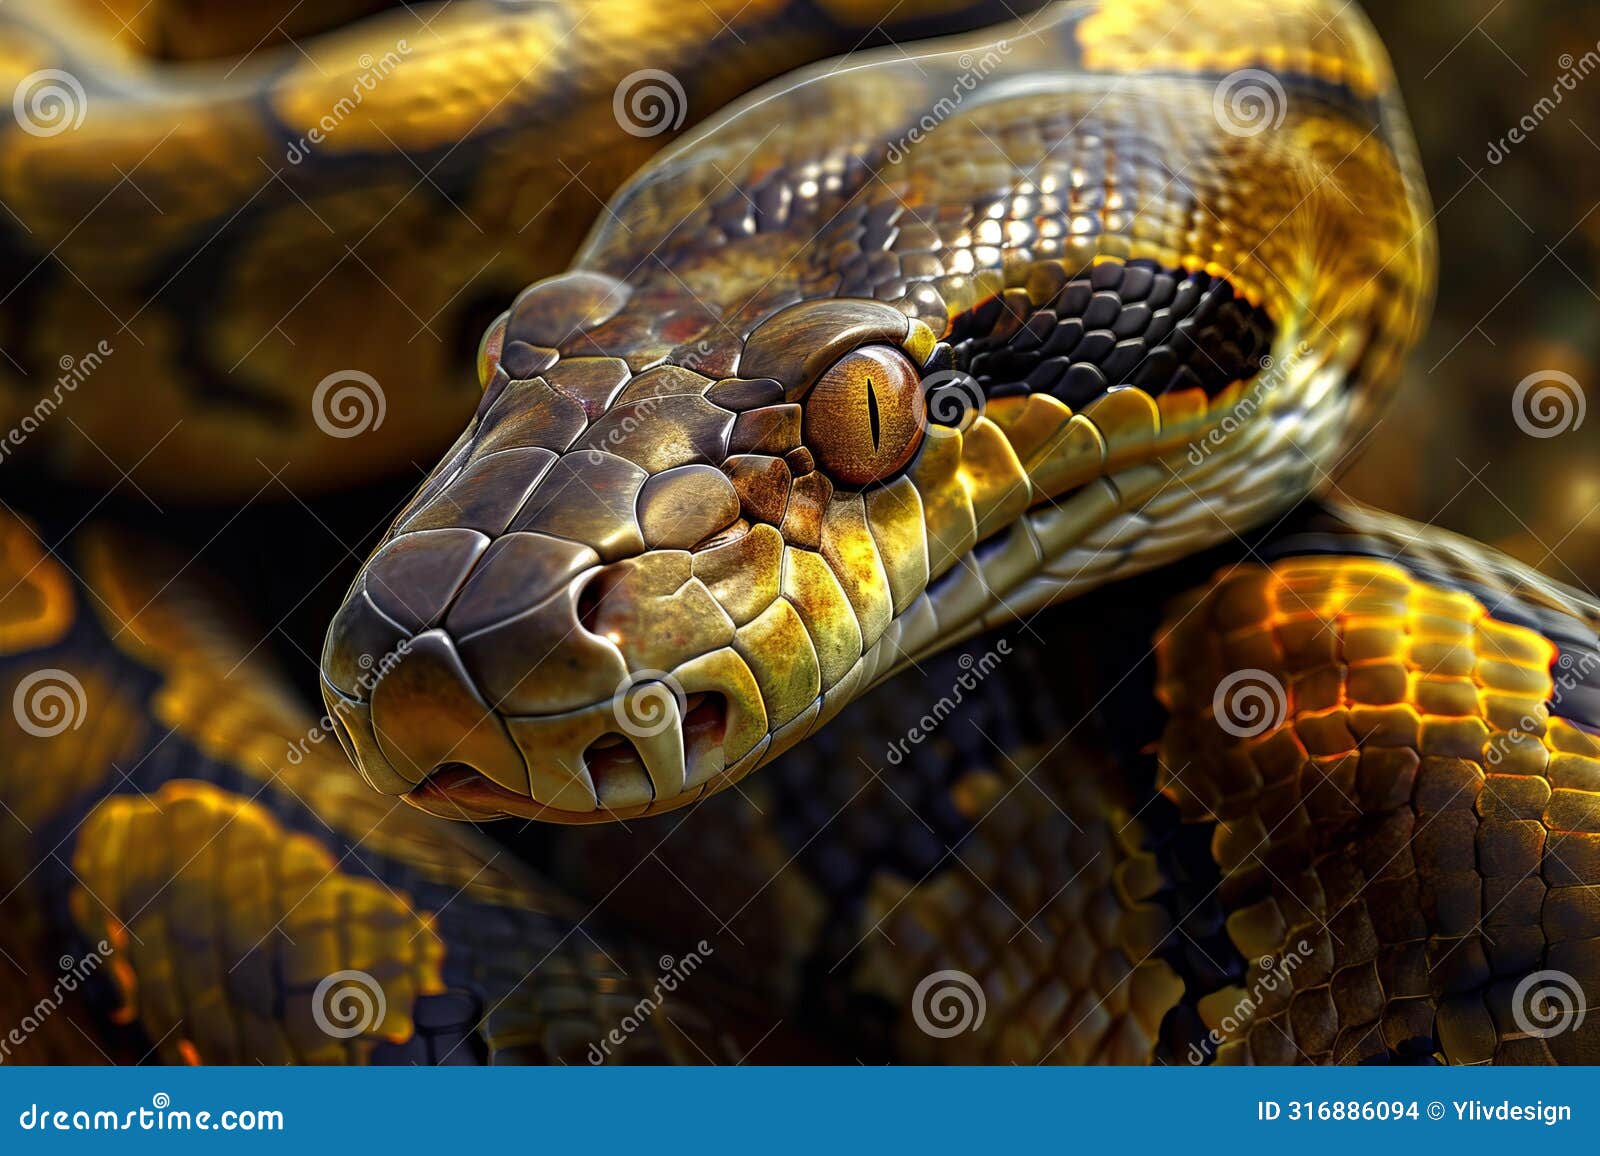 elongated anaconda snake head. generate ai